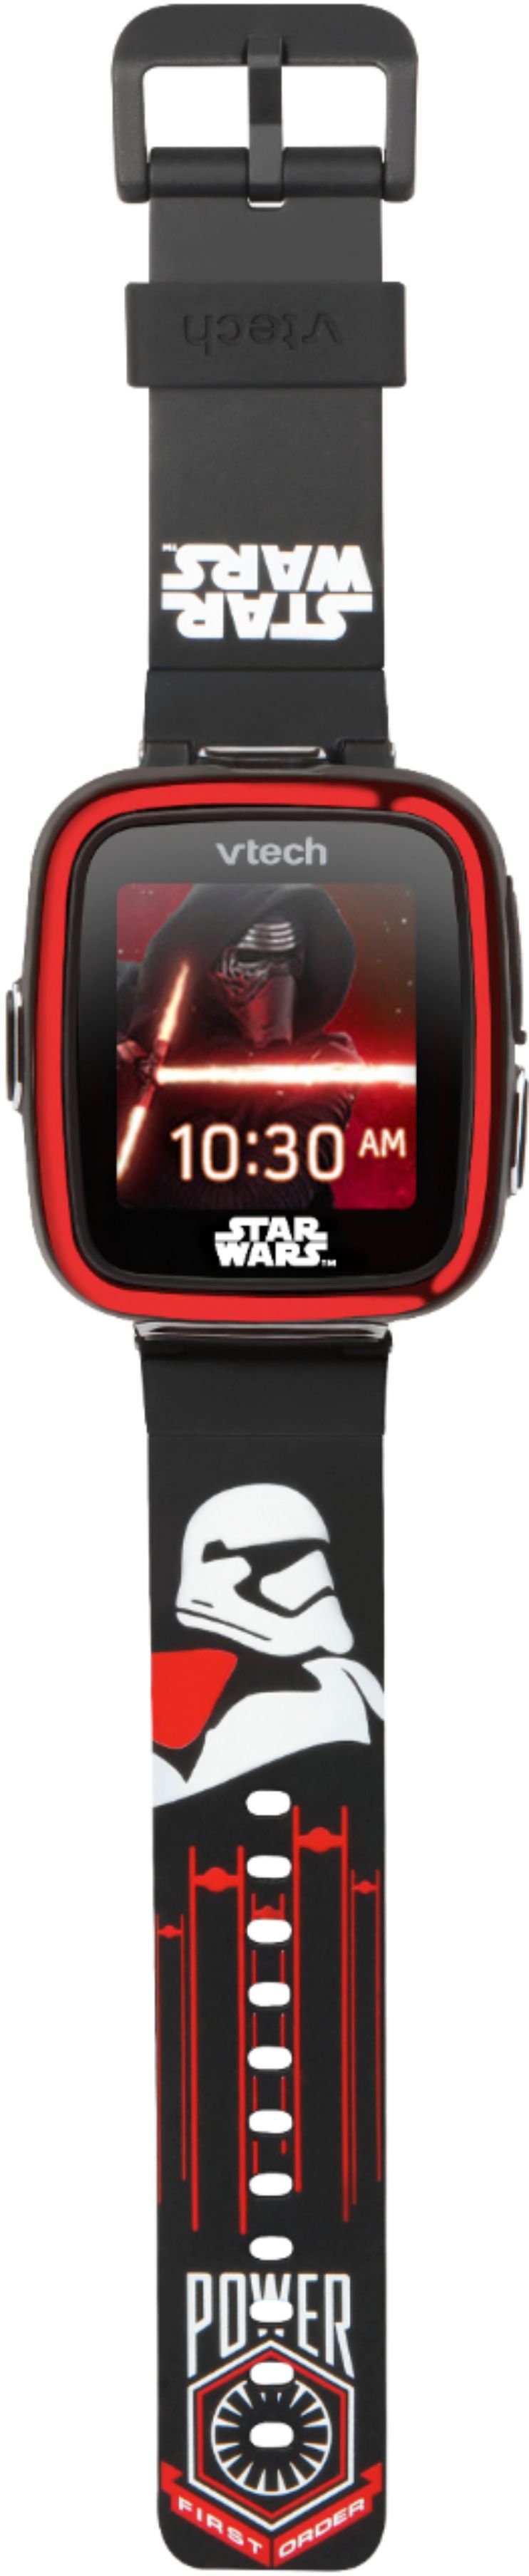 vtech star wars stormtrooper watch